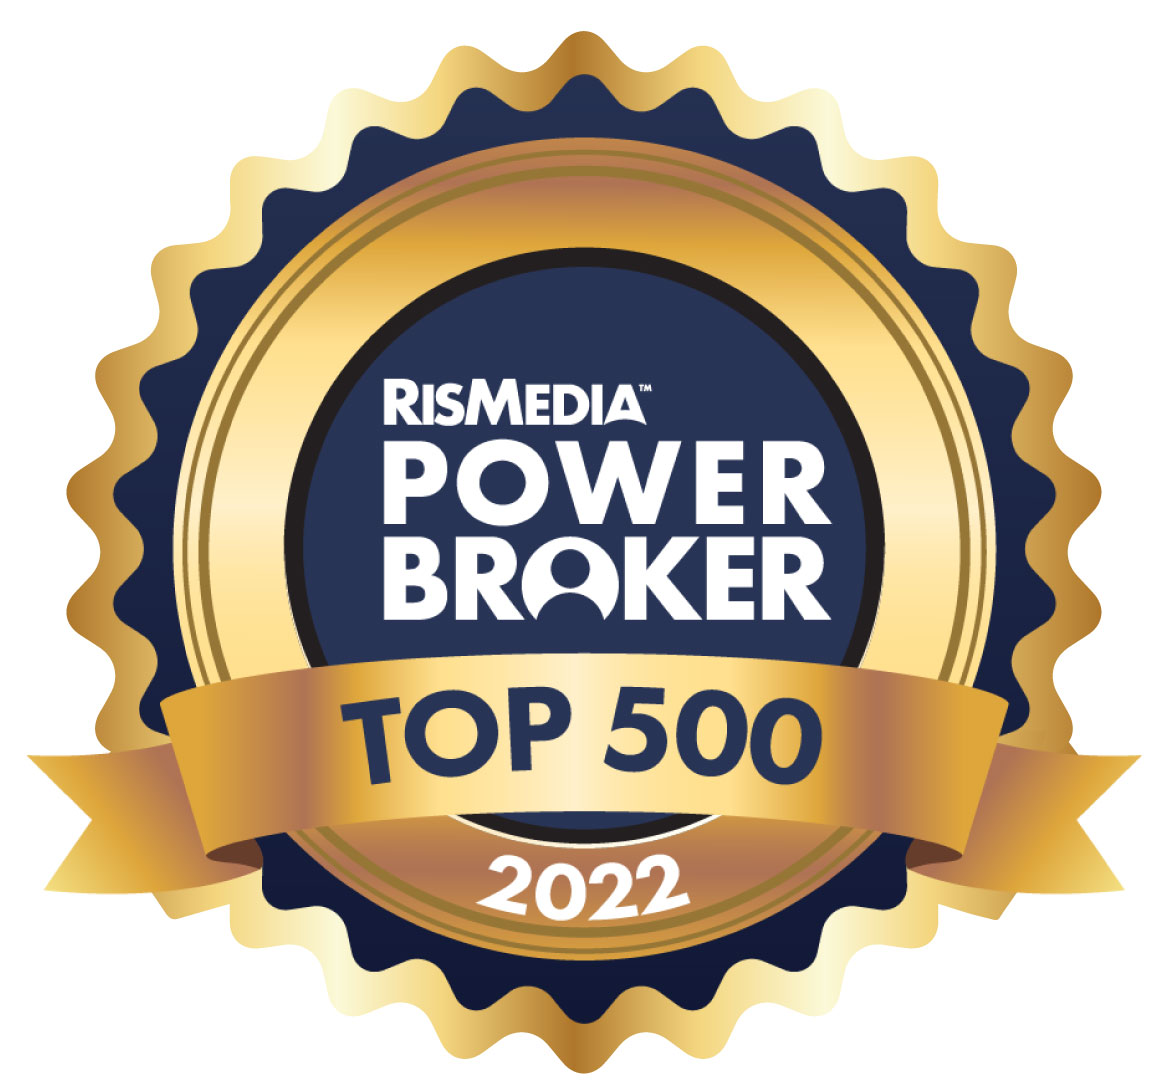 Rismedia power broker top 500 